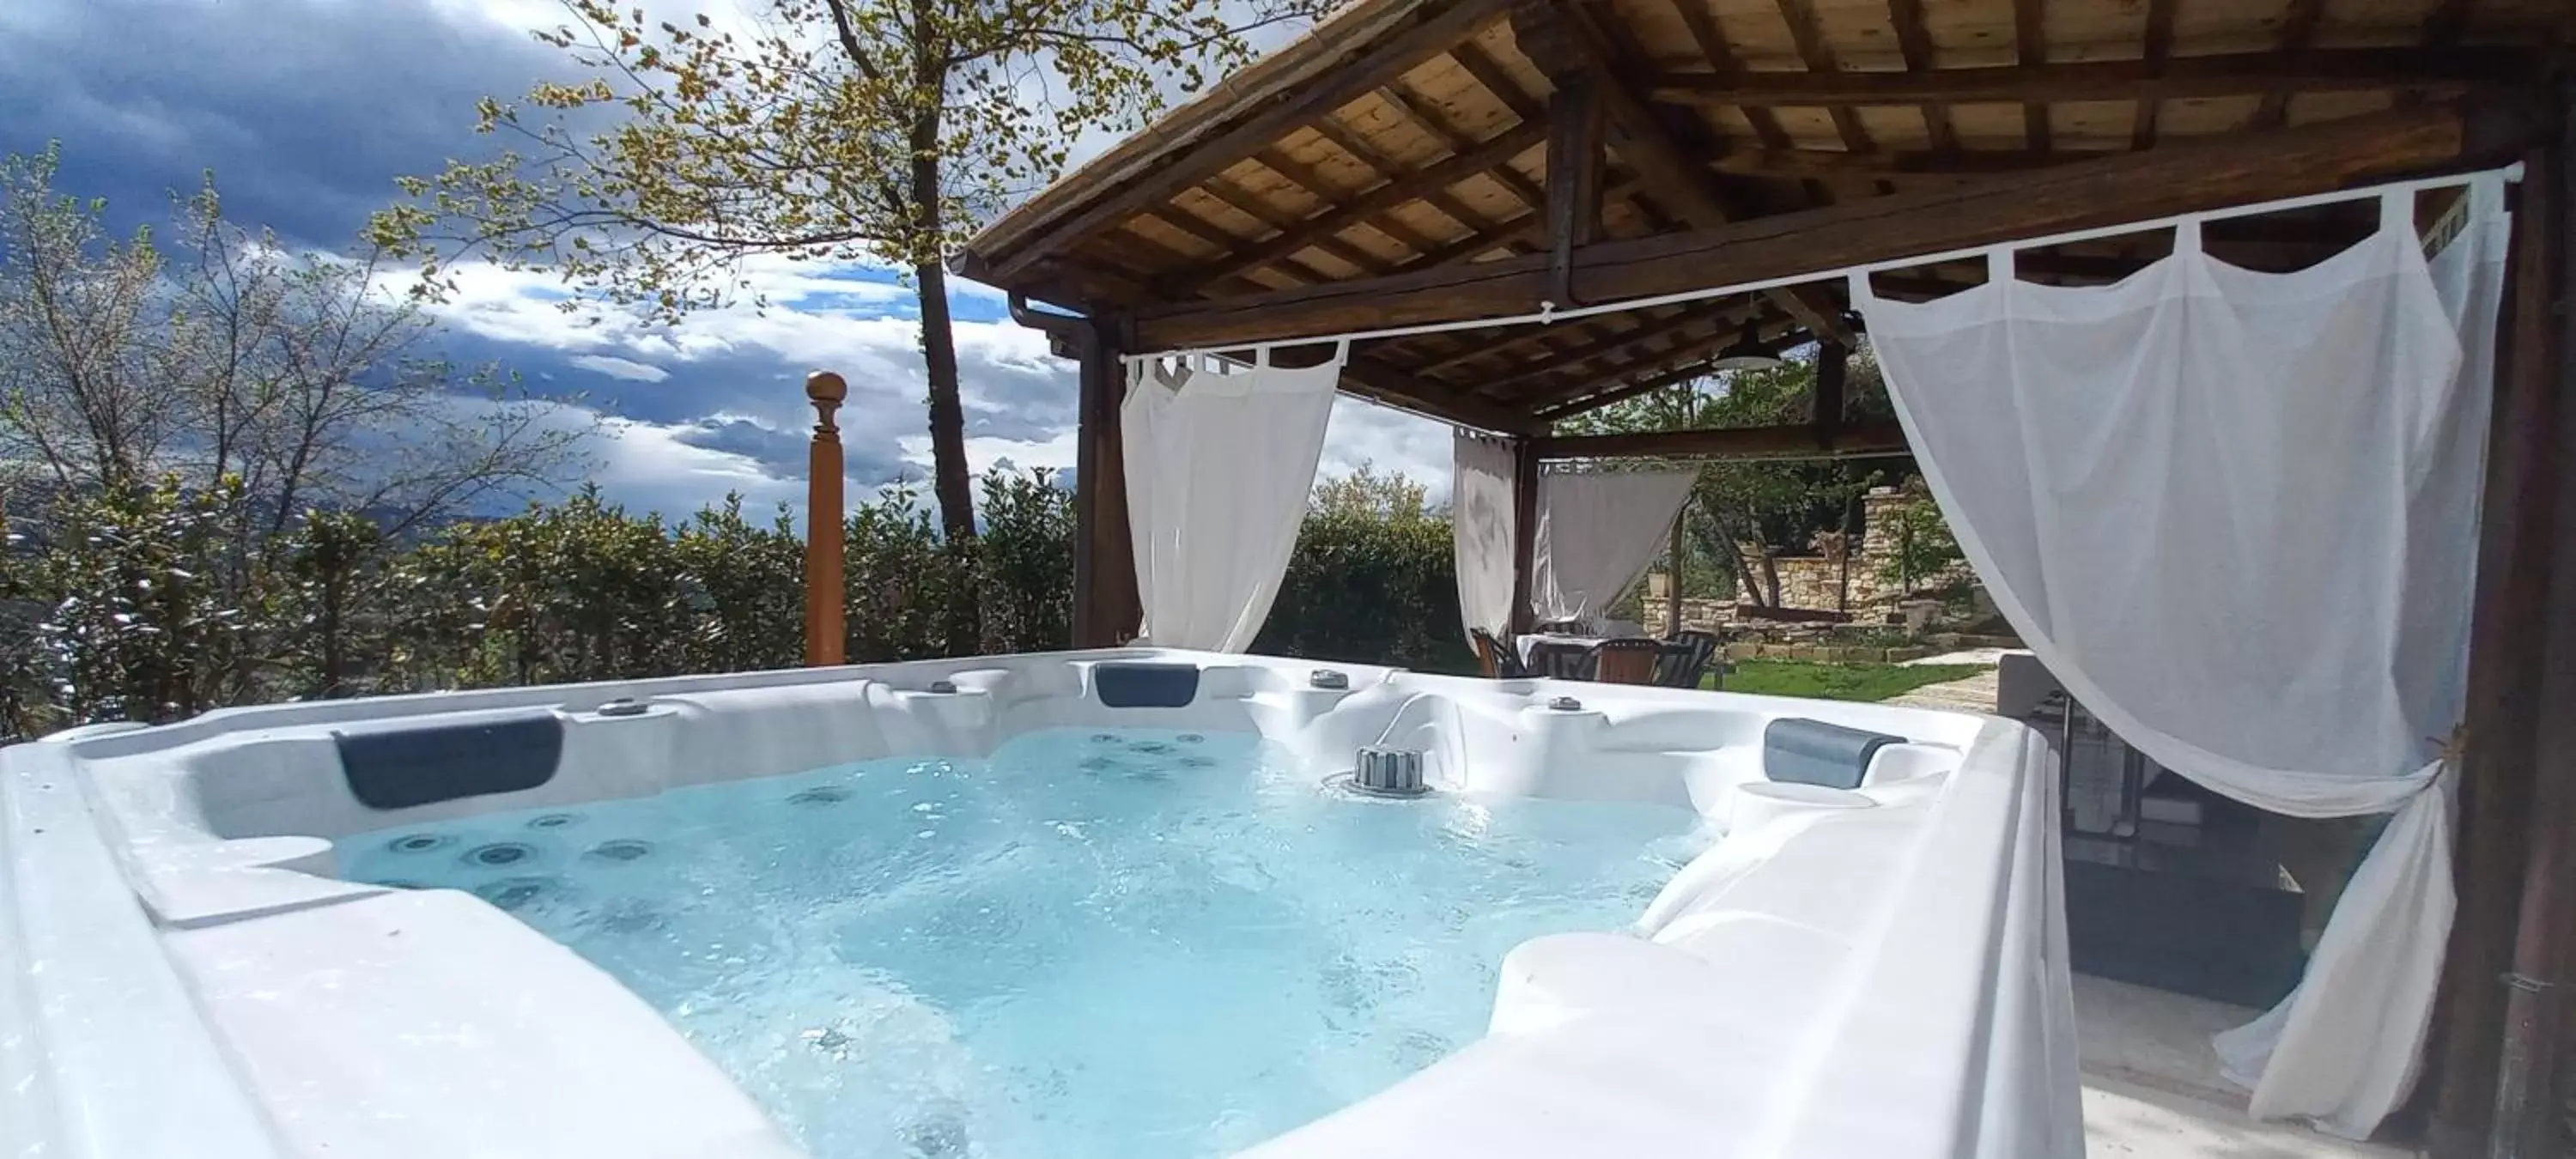 Hot Tub, Swimming Pool in Domus Antiqua Bed & Breakfast